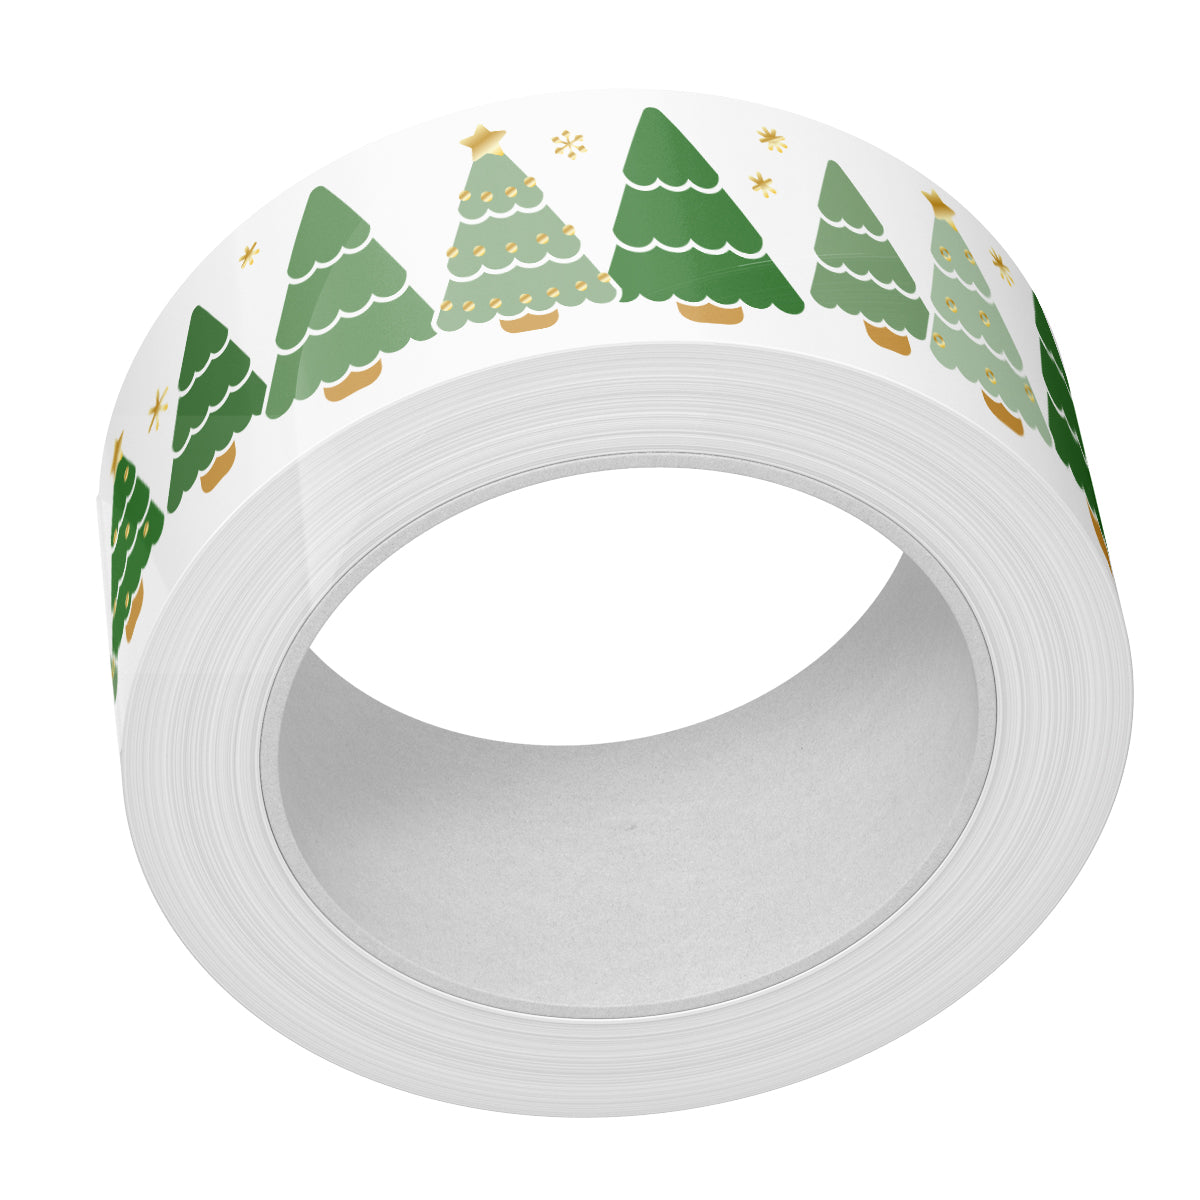 Winter Washi Tape, Snowman Washi Tape, Foil Christmas Washi Tape